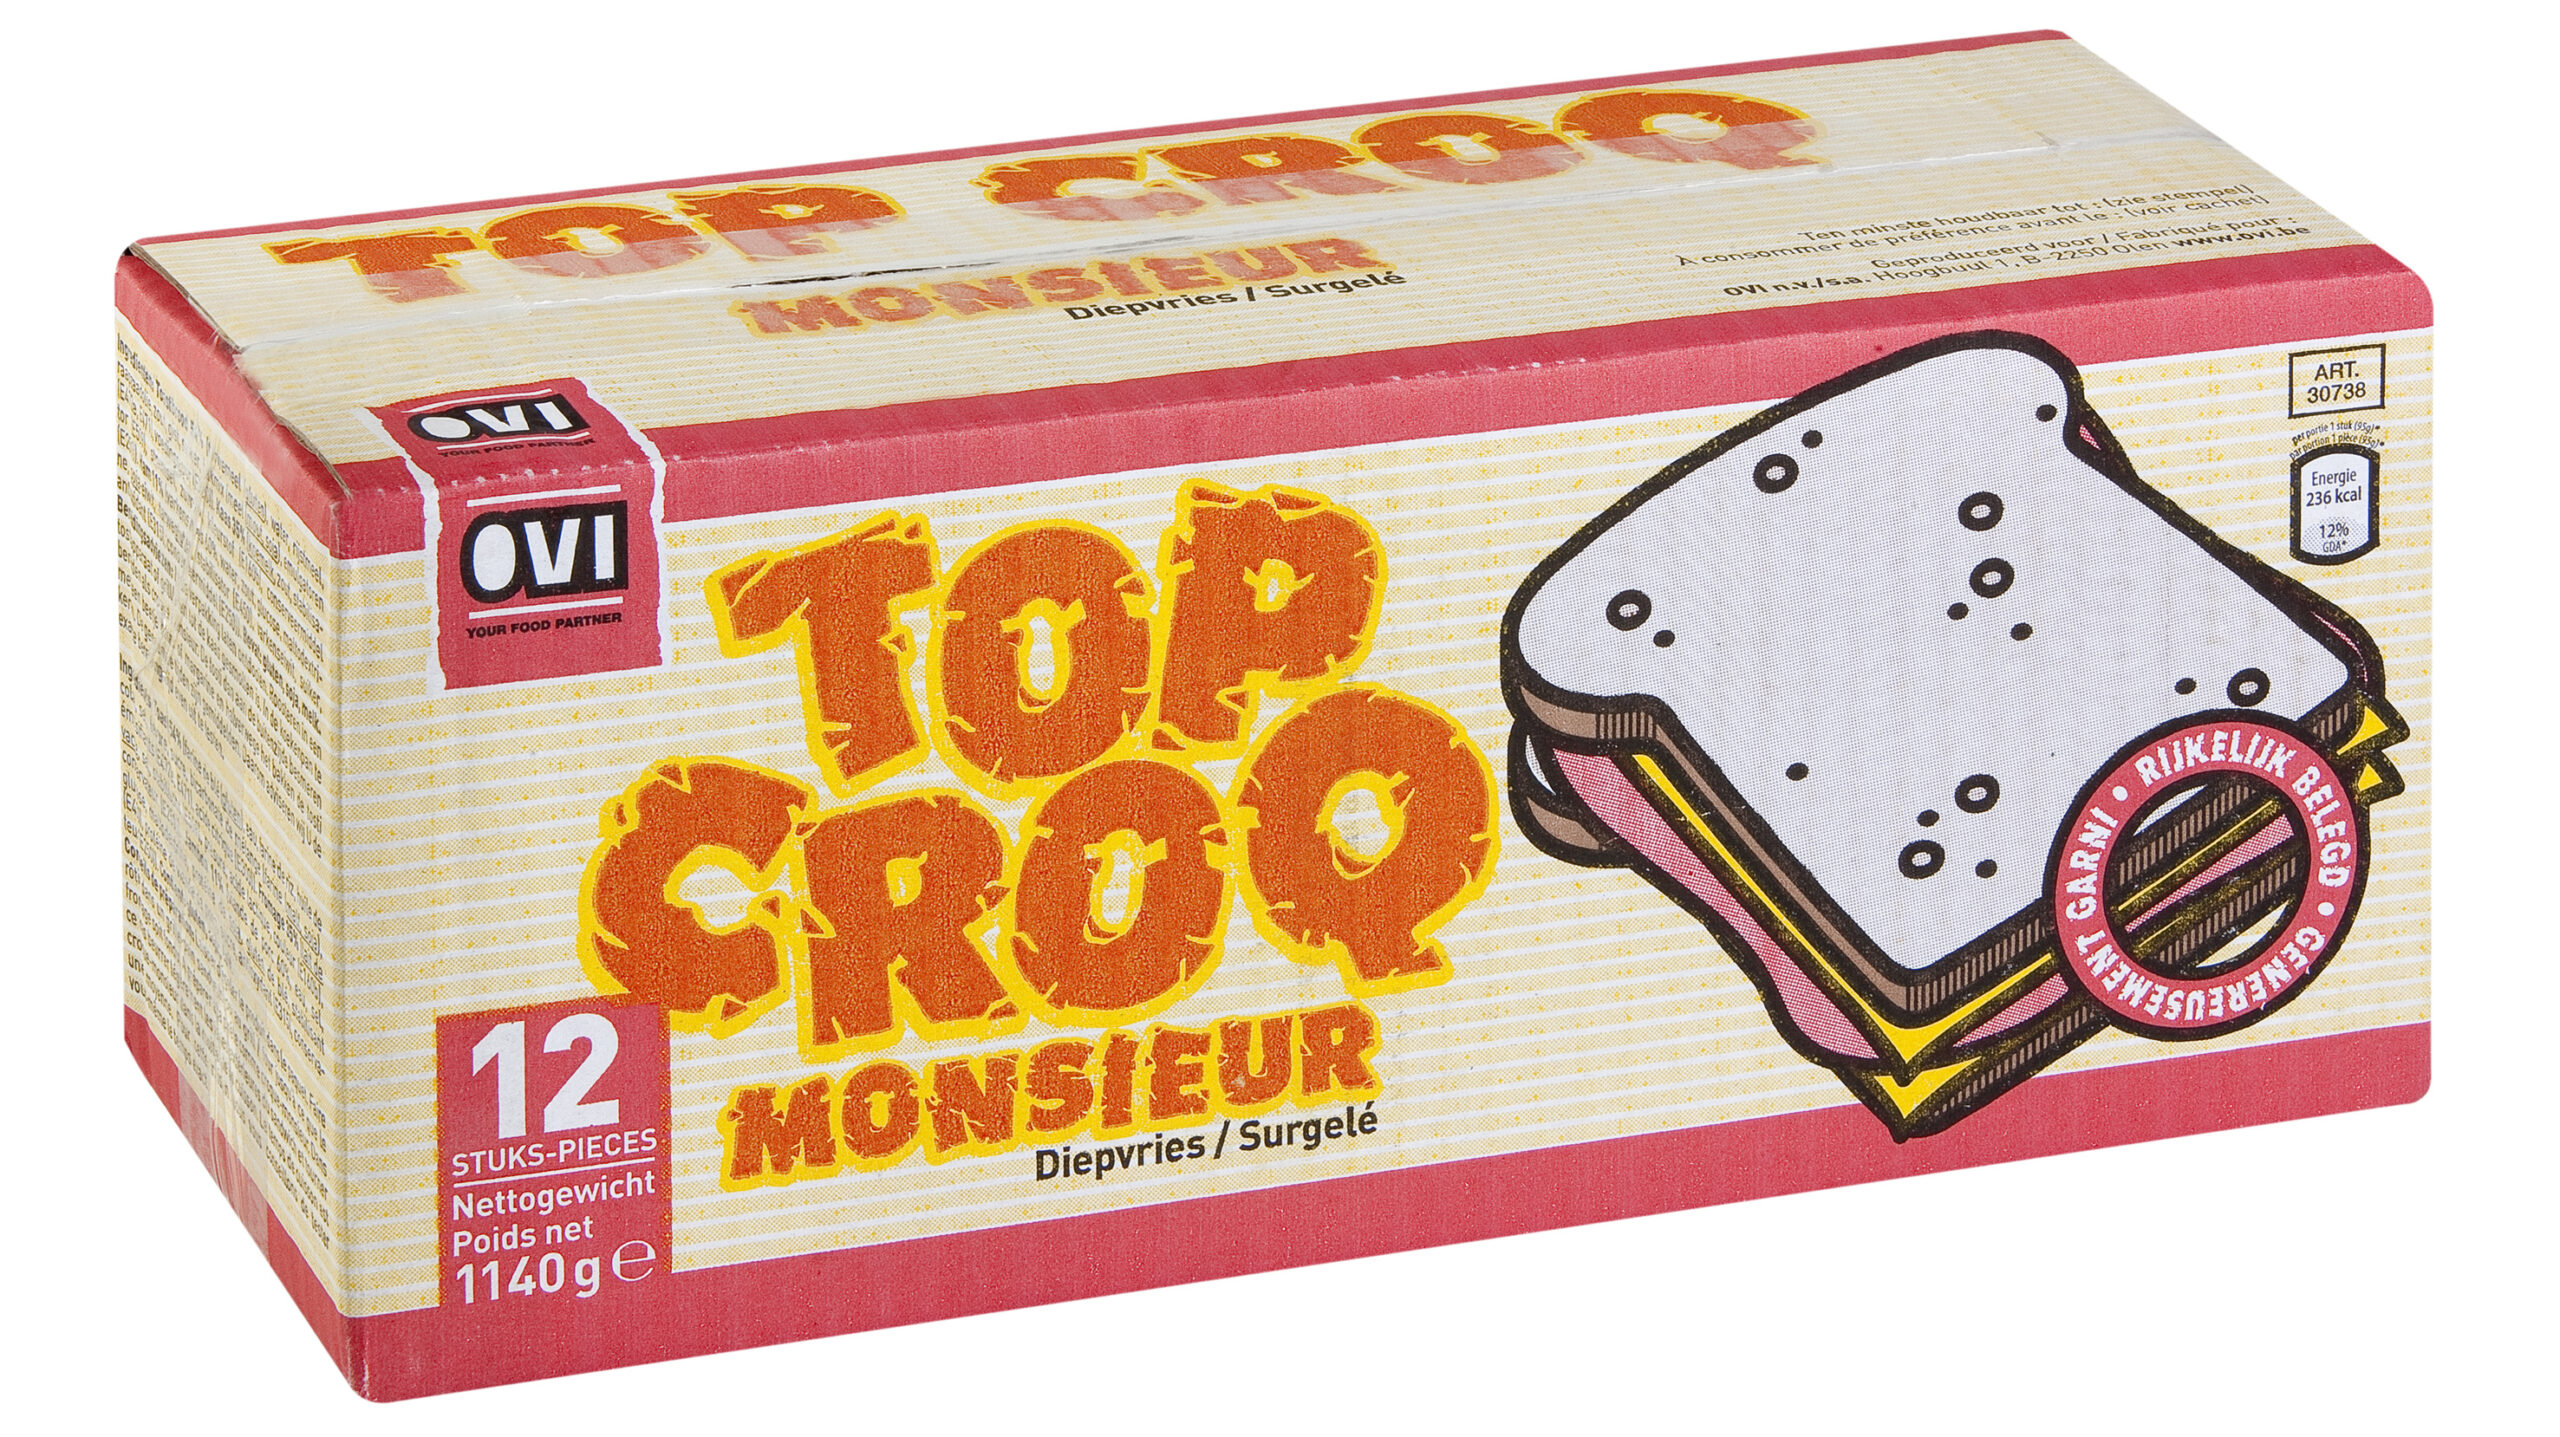 Top Croq monsieur 12 x 95 g OVI